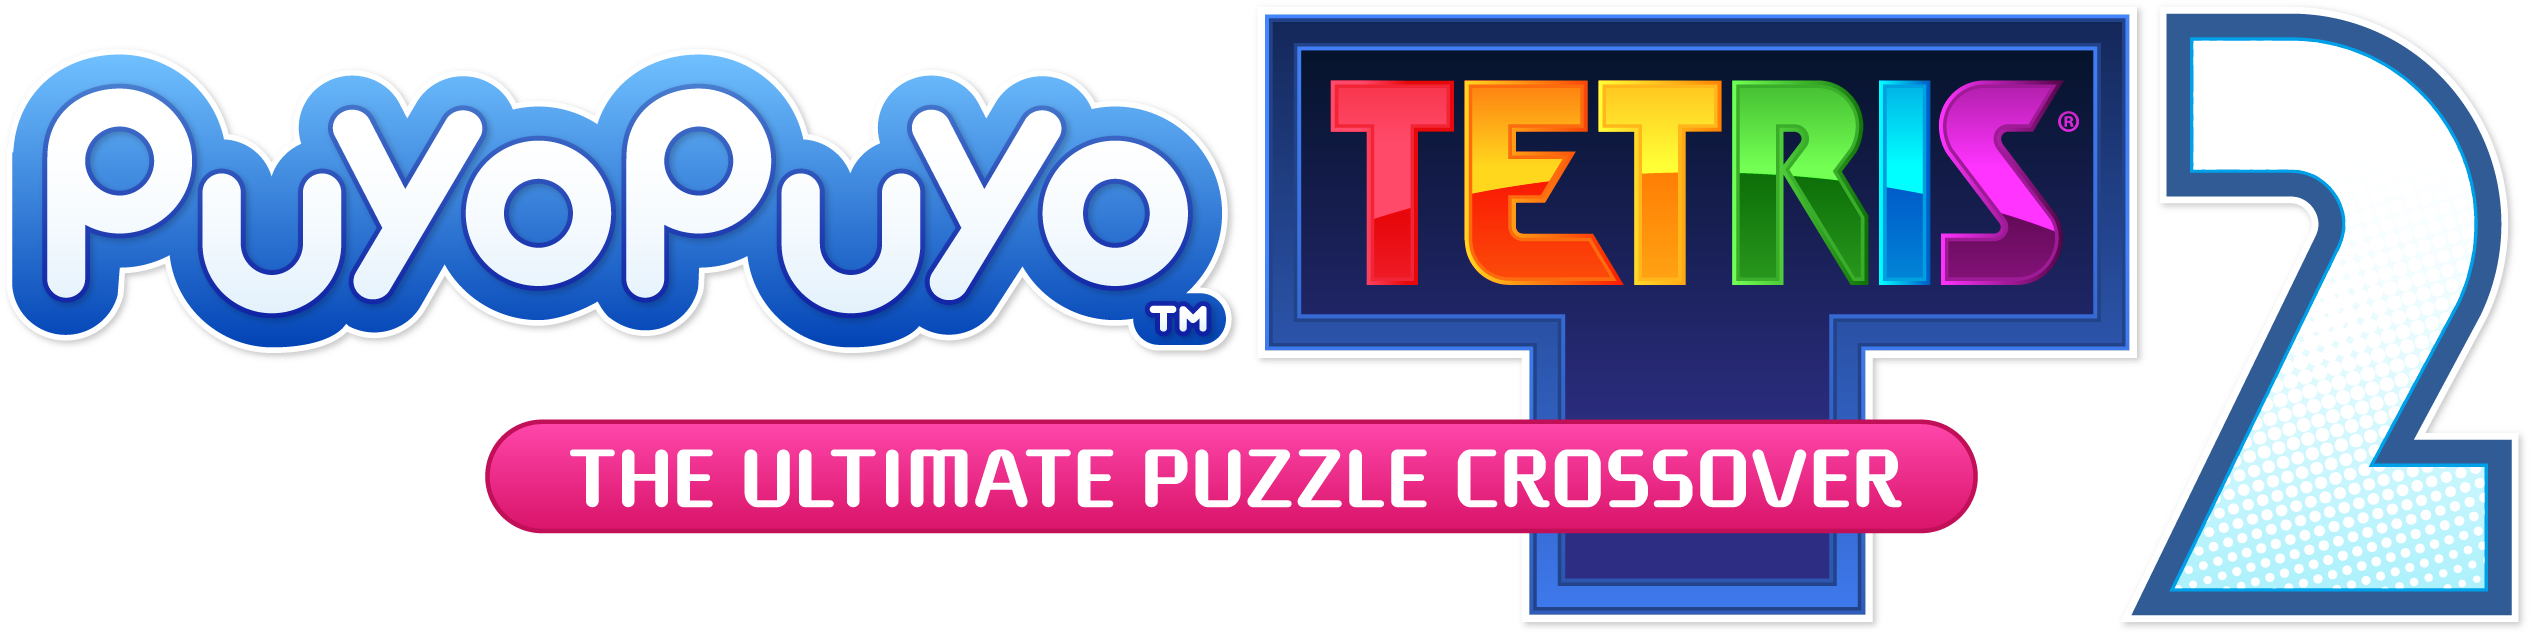 Tetris Logo PNG Images Transparent Background | PNG Play